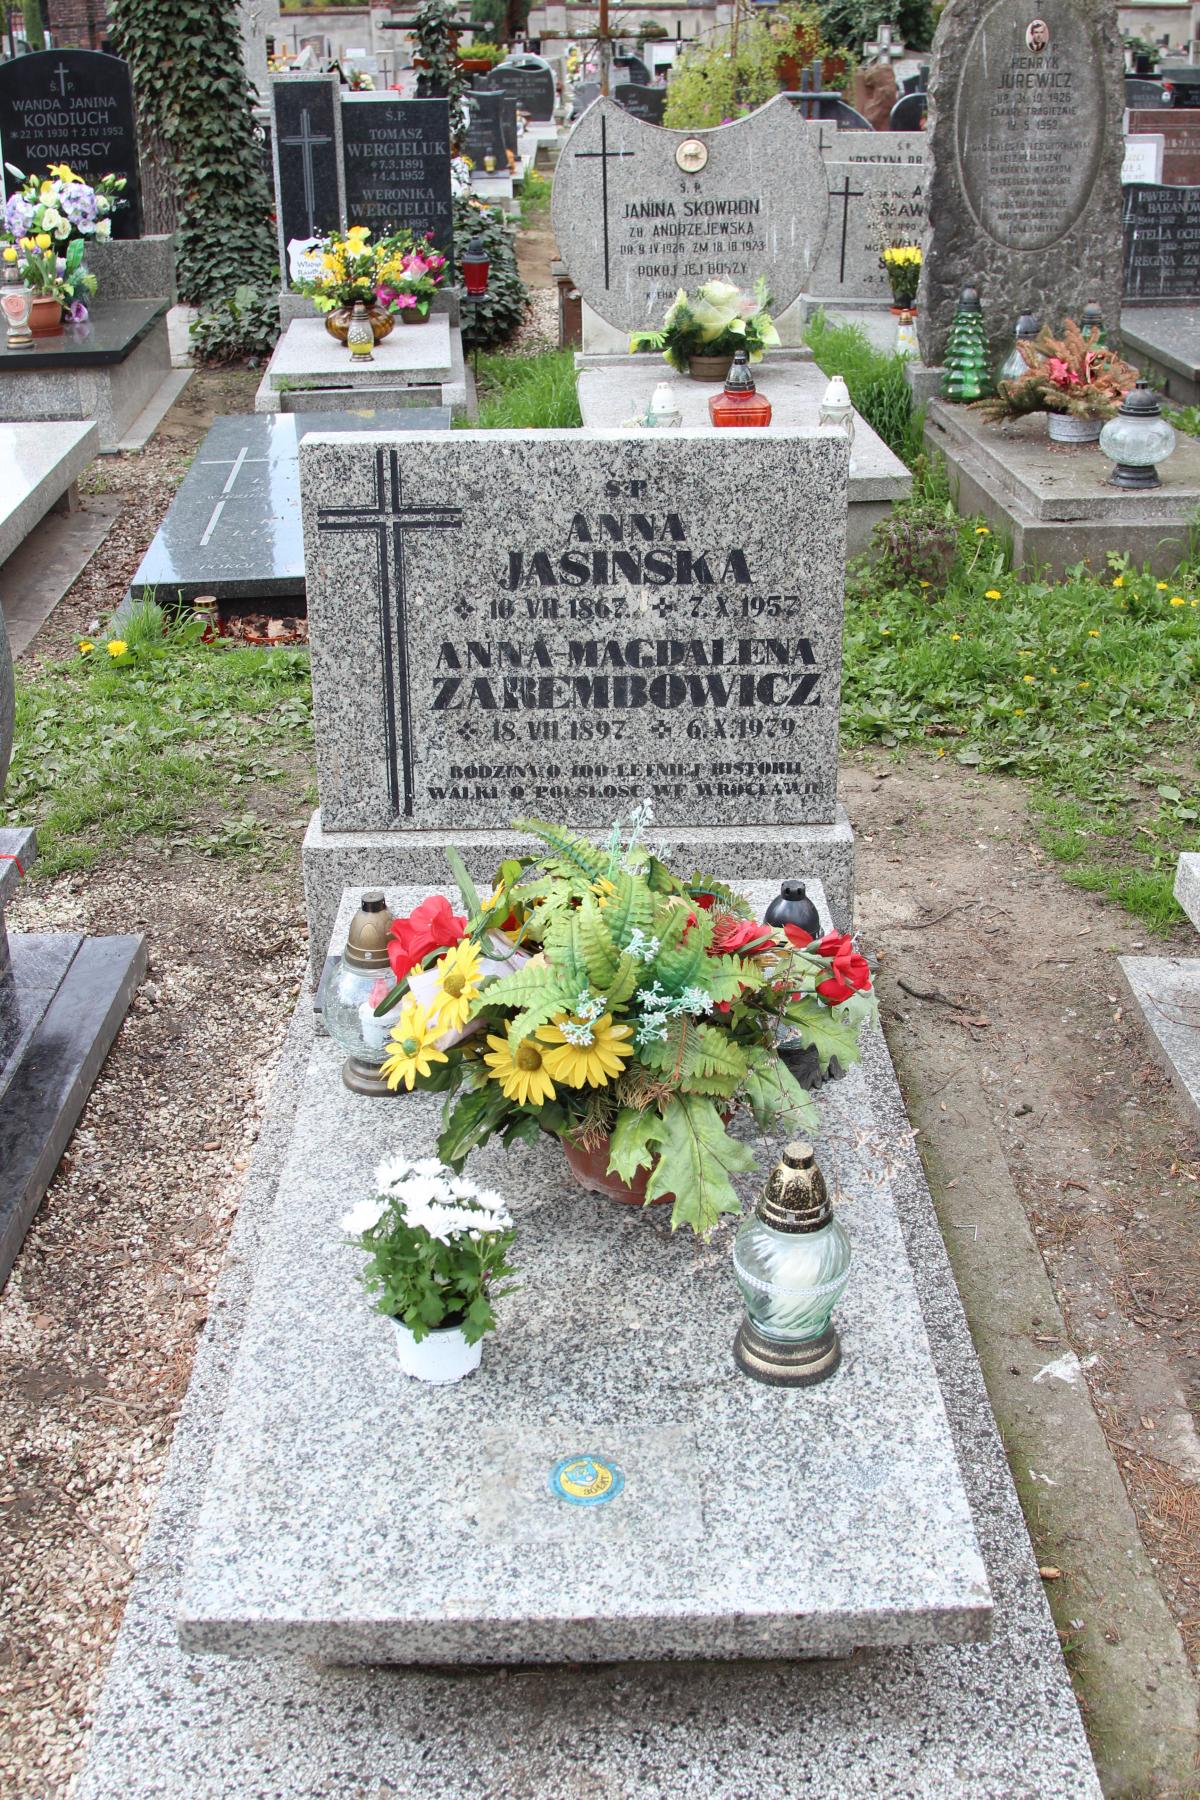 Wikipedia, Anna Jasiska, Laurentius Cemetery, Self-published work